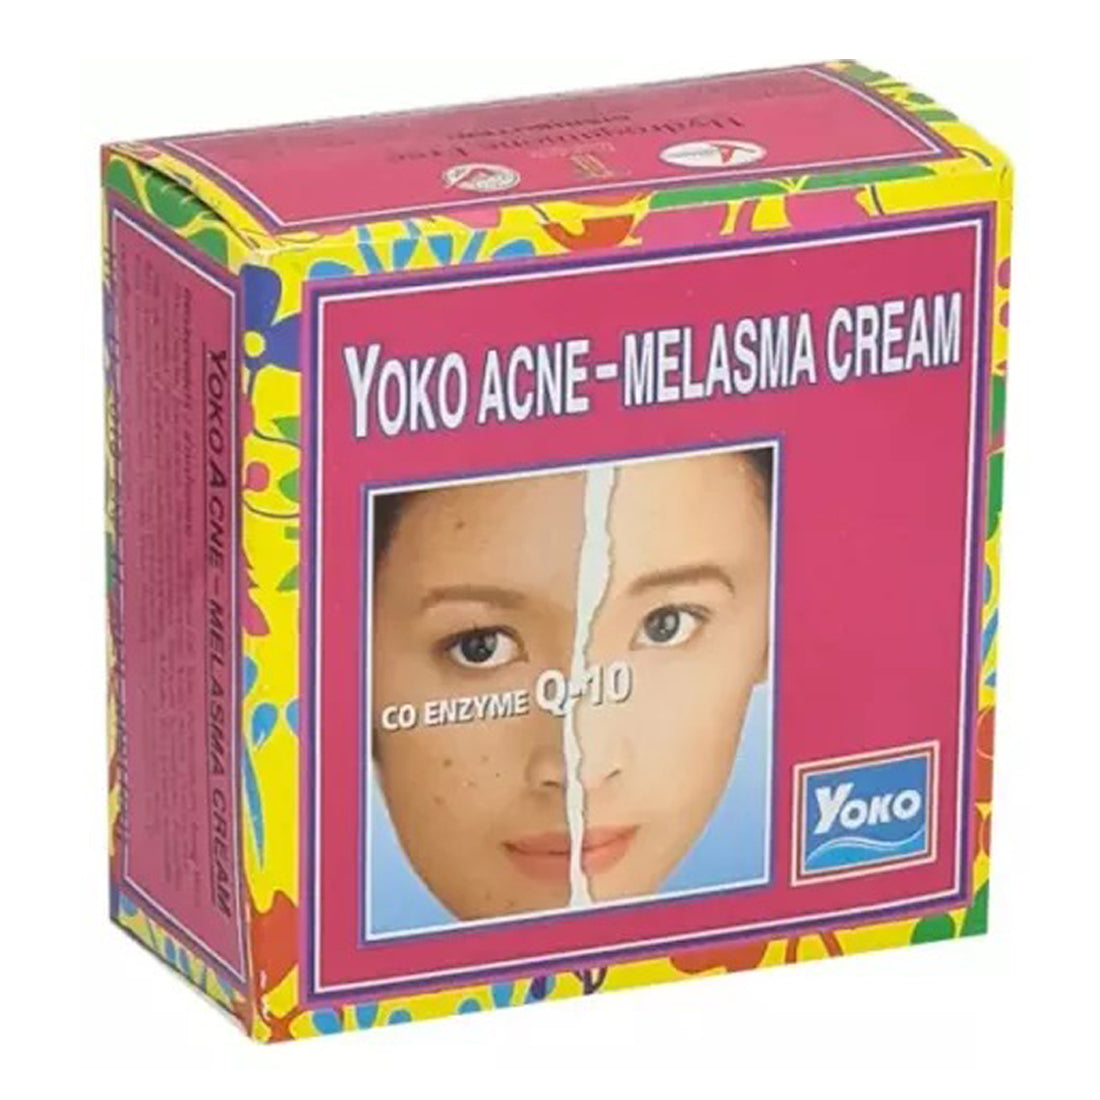 Yoko Acne Melasma Cream Co Enzyme Q10 4gm